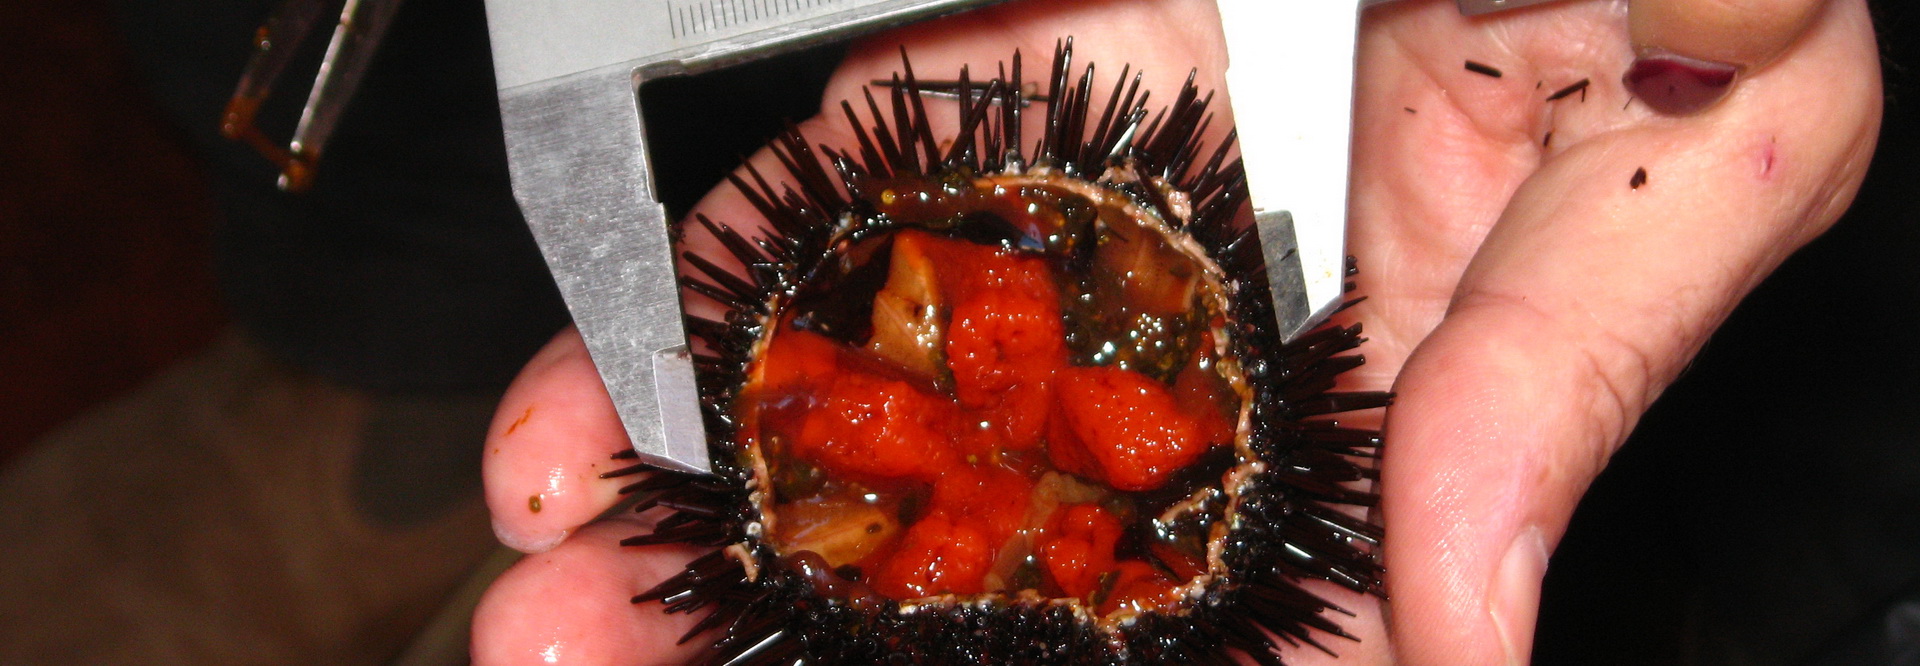 Sea urchin monitoring